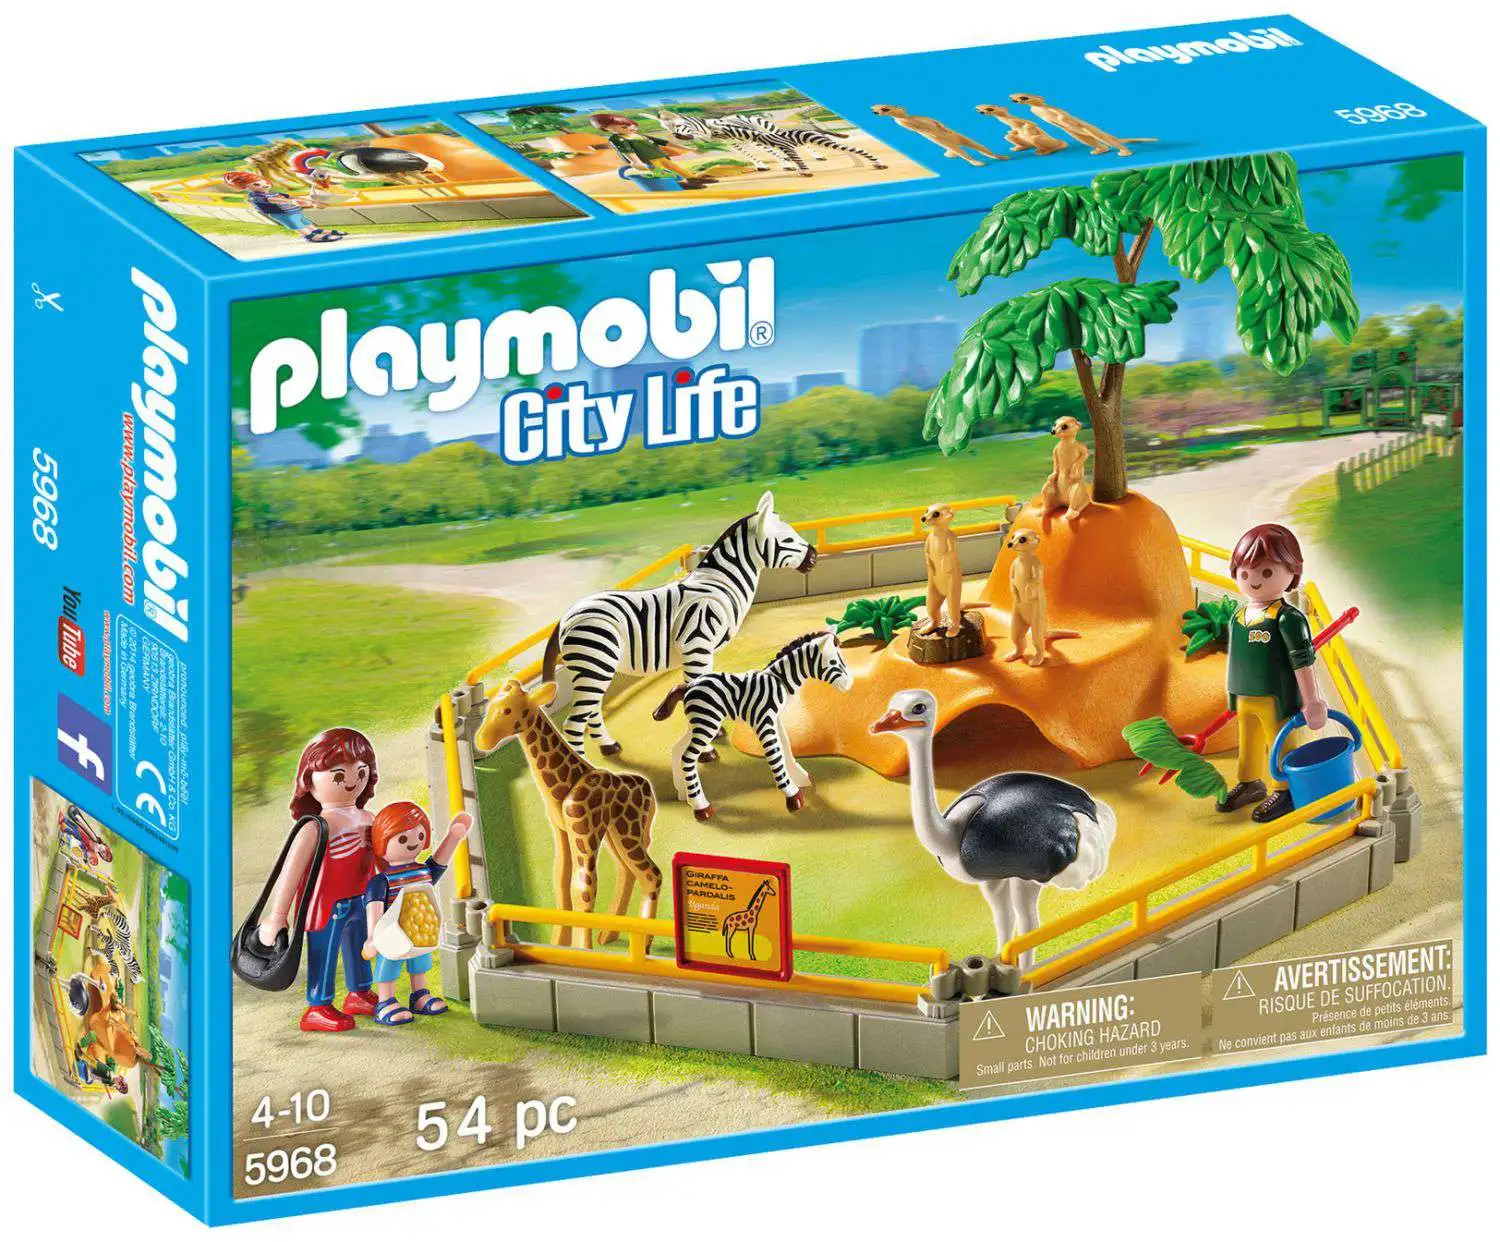 Playmobil City Life Kids Fashion Store